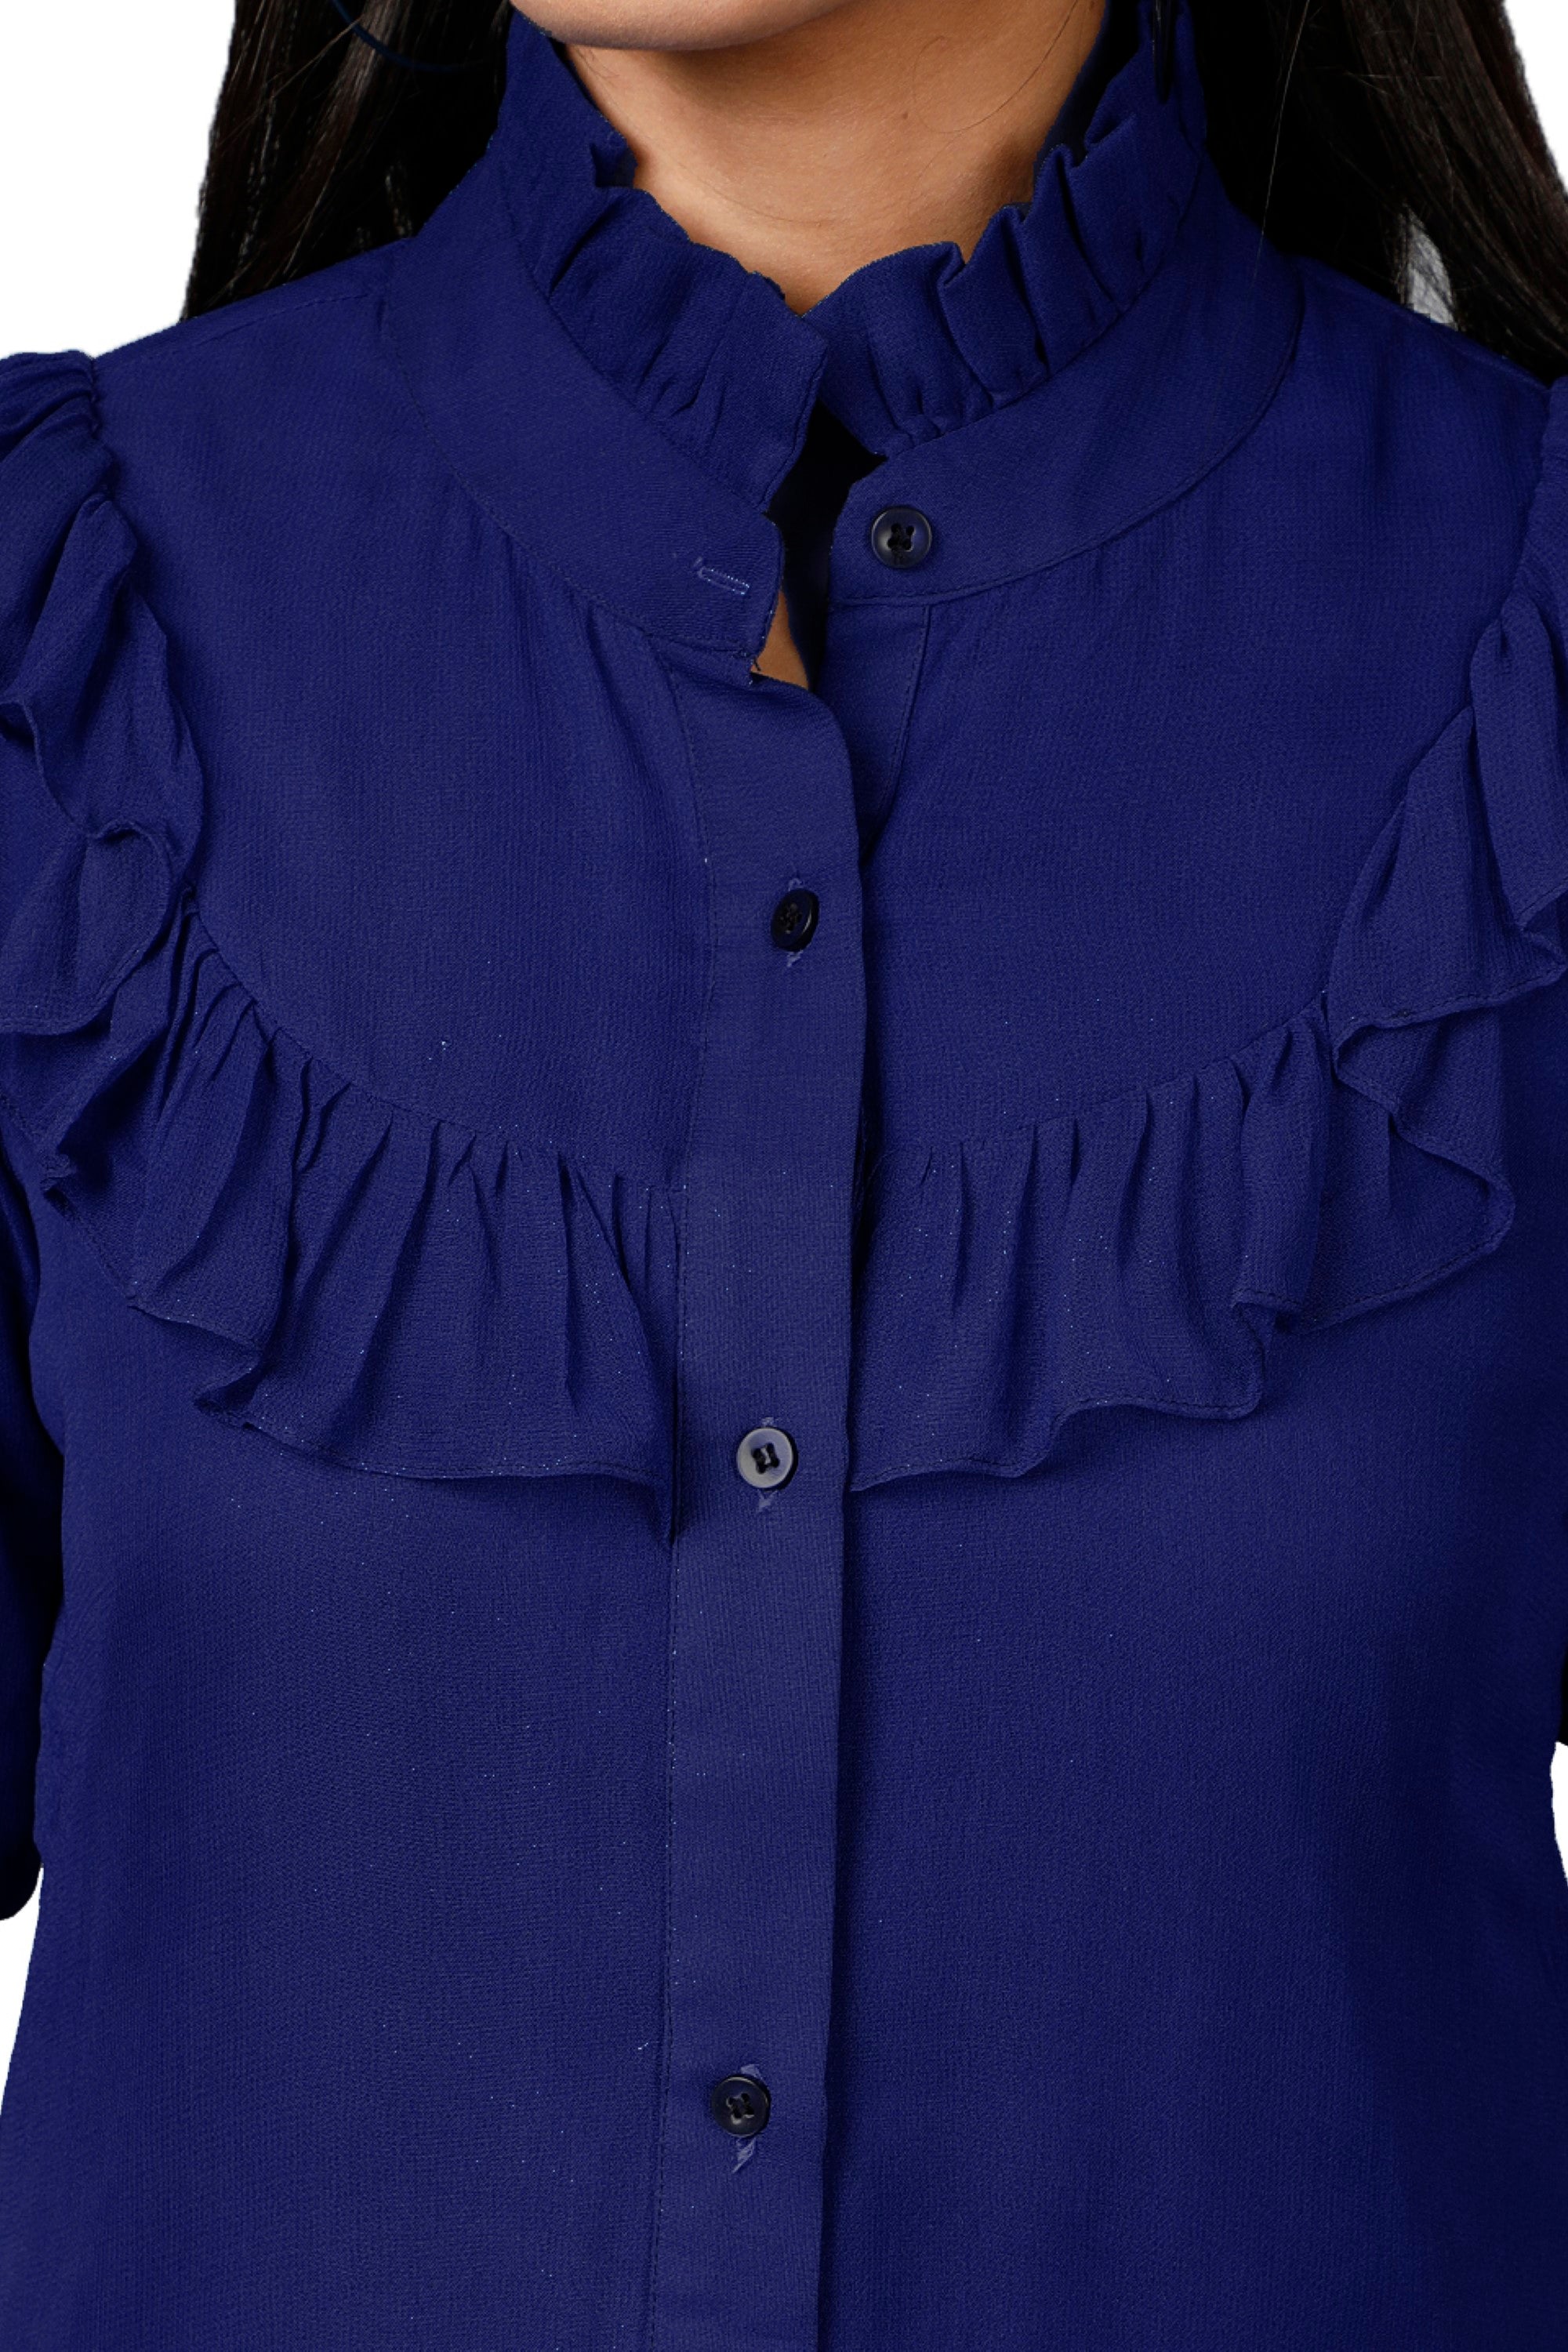 Women's Dark Blue Shirt With Ruffle Yoke And Cuff - MIRACOLOS by Ruchi